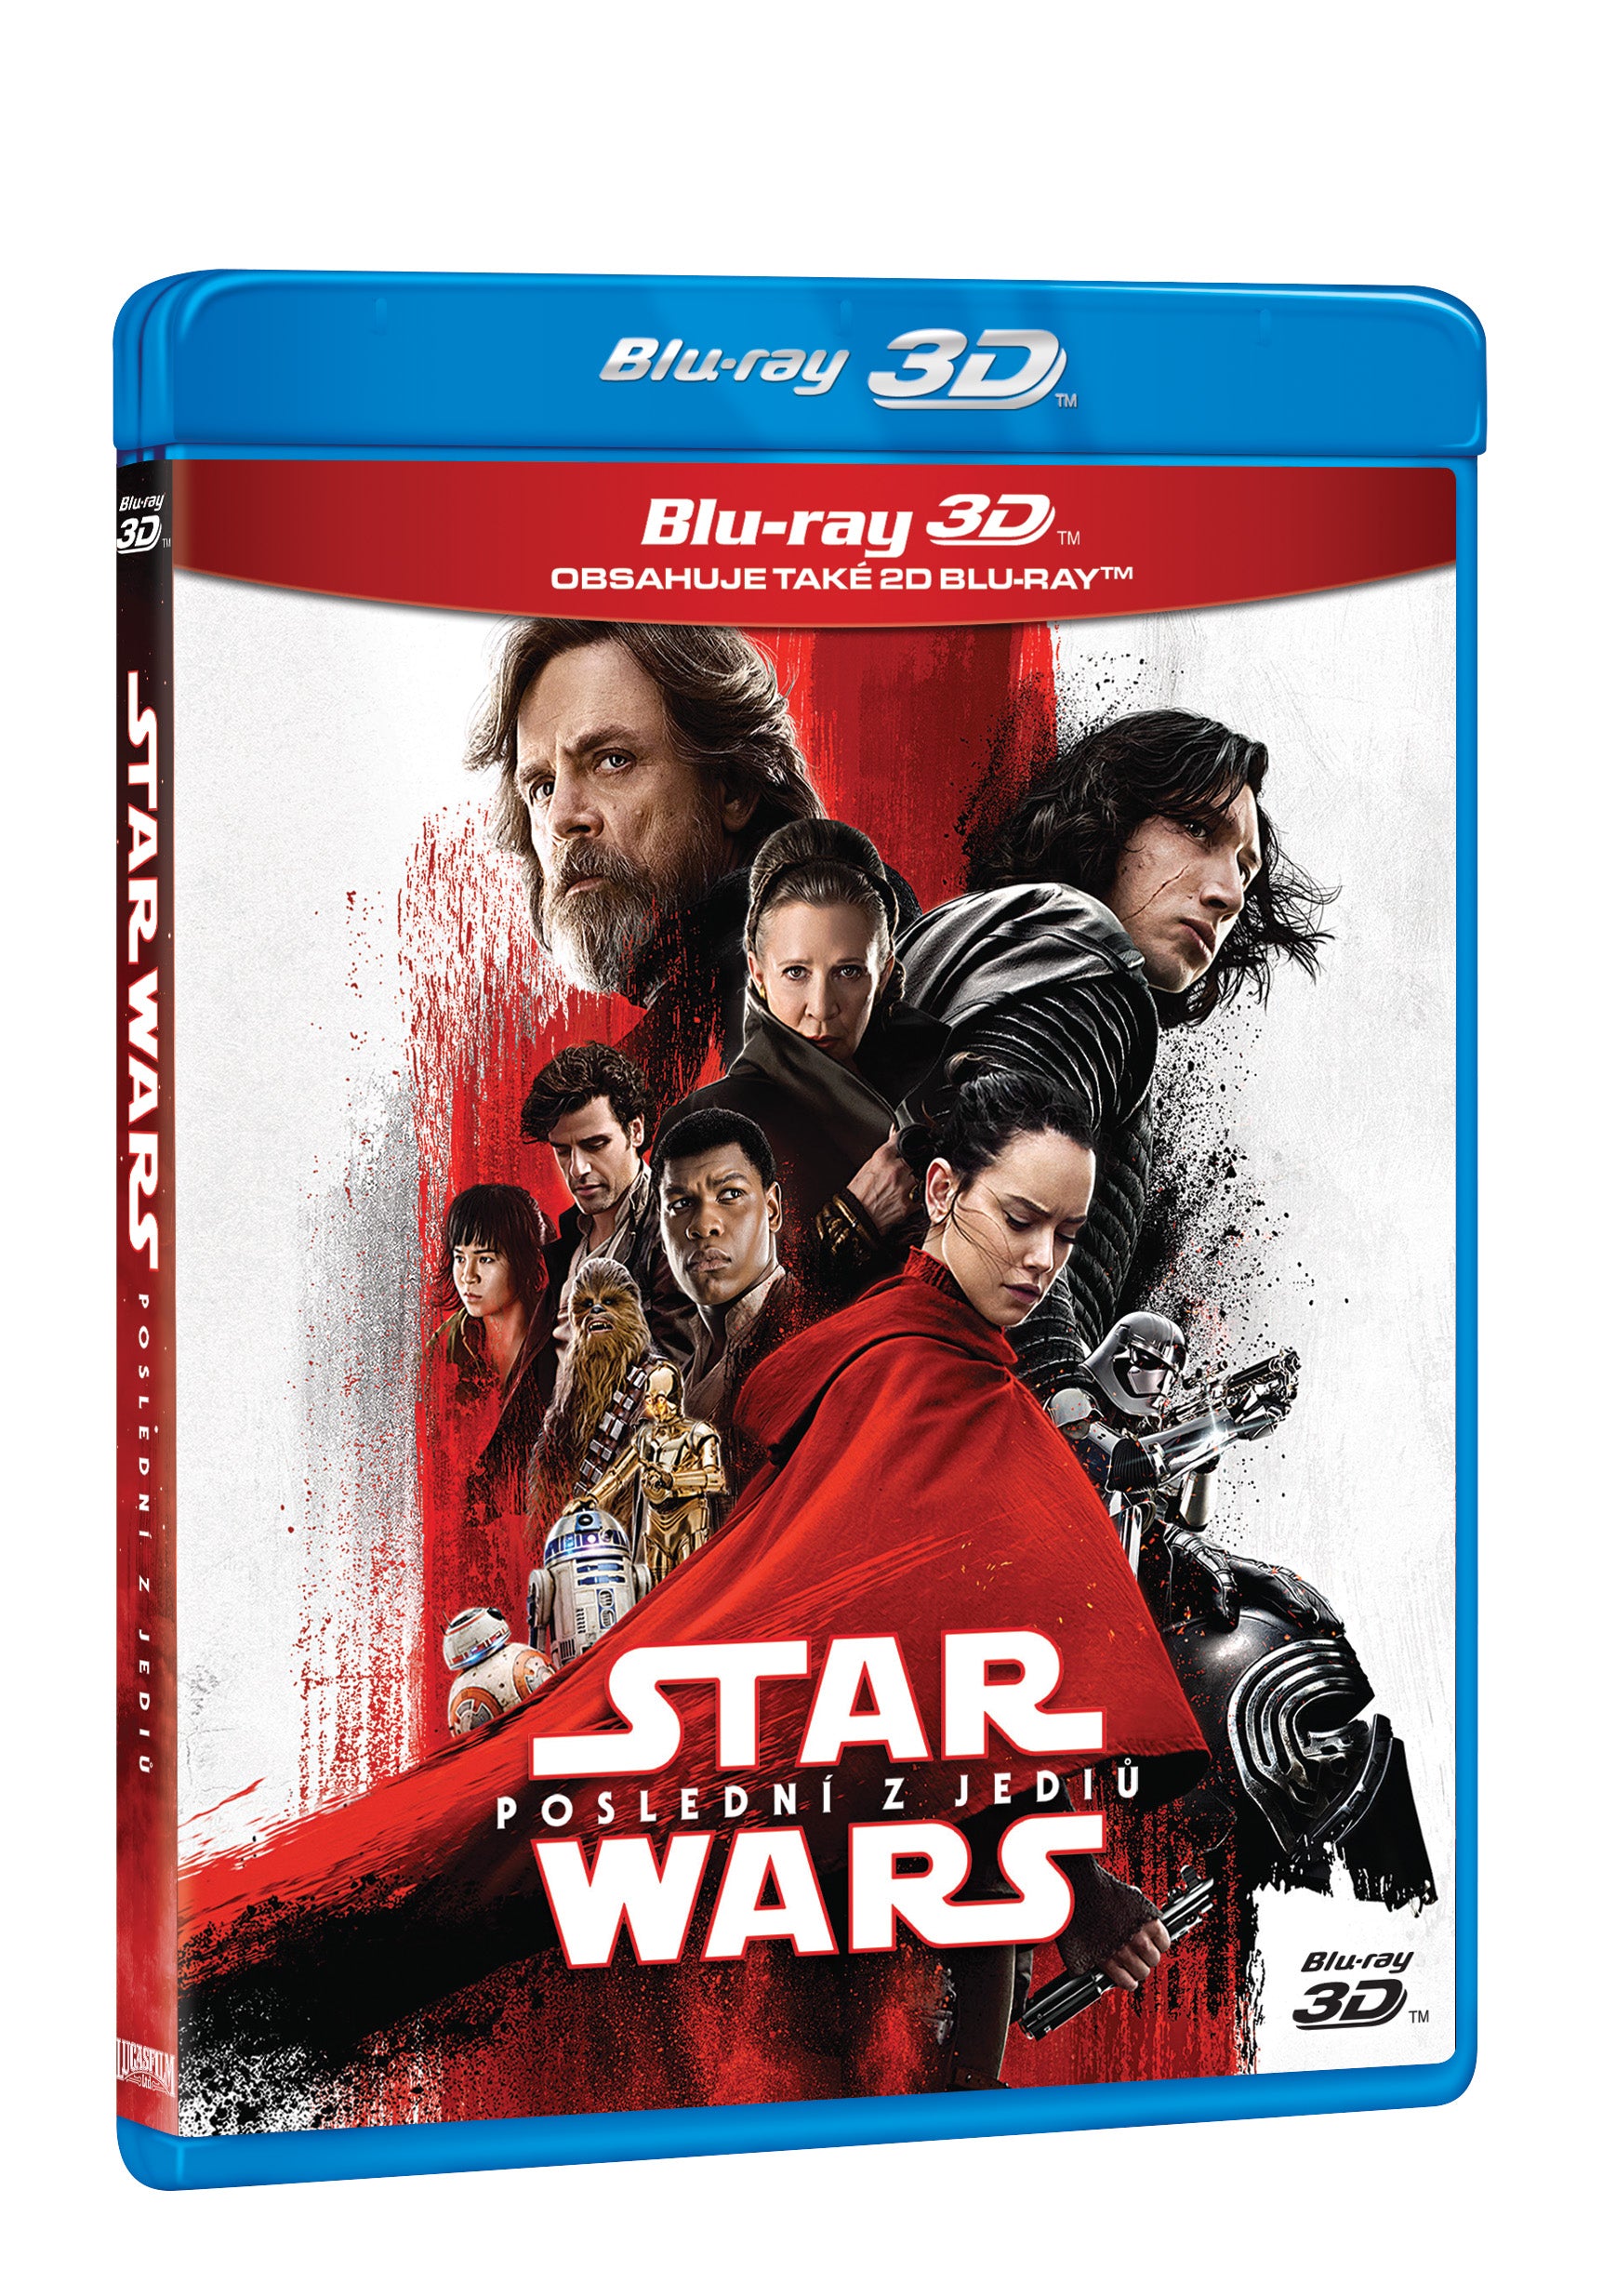 Star Wars: Posledni z Jediu 3BD (3D+2D+bonus disk) / Star Wars: The Last Jedi - Czech version